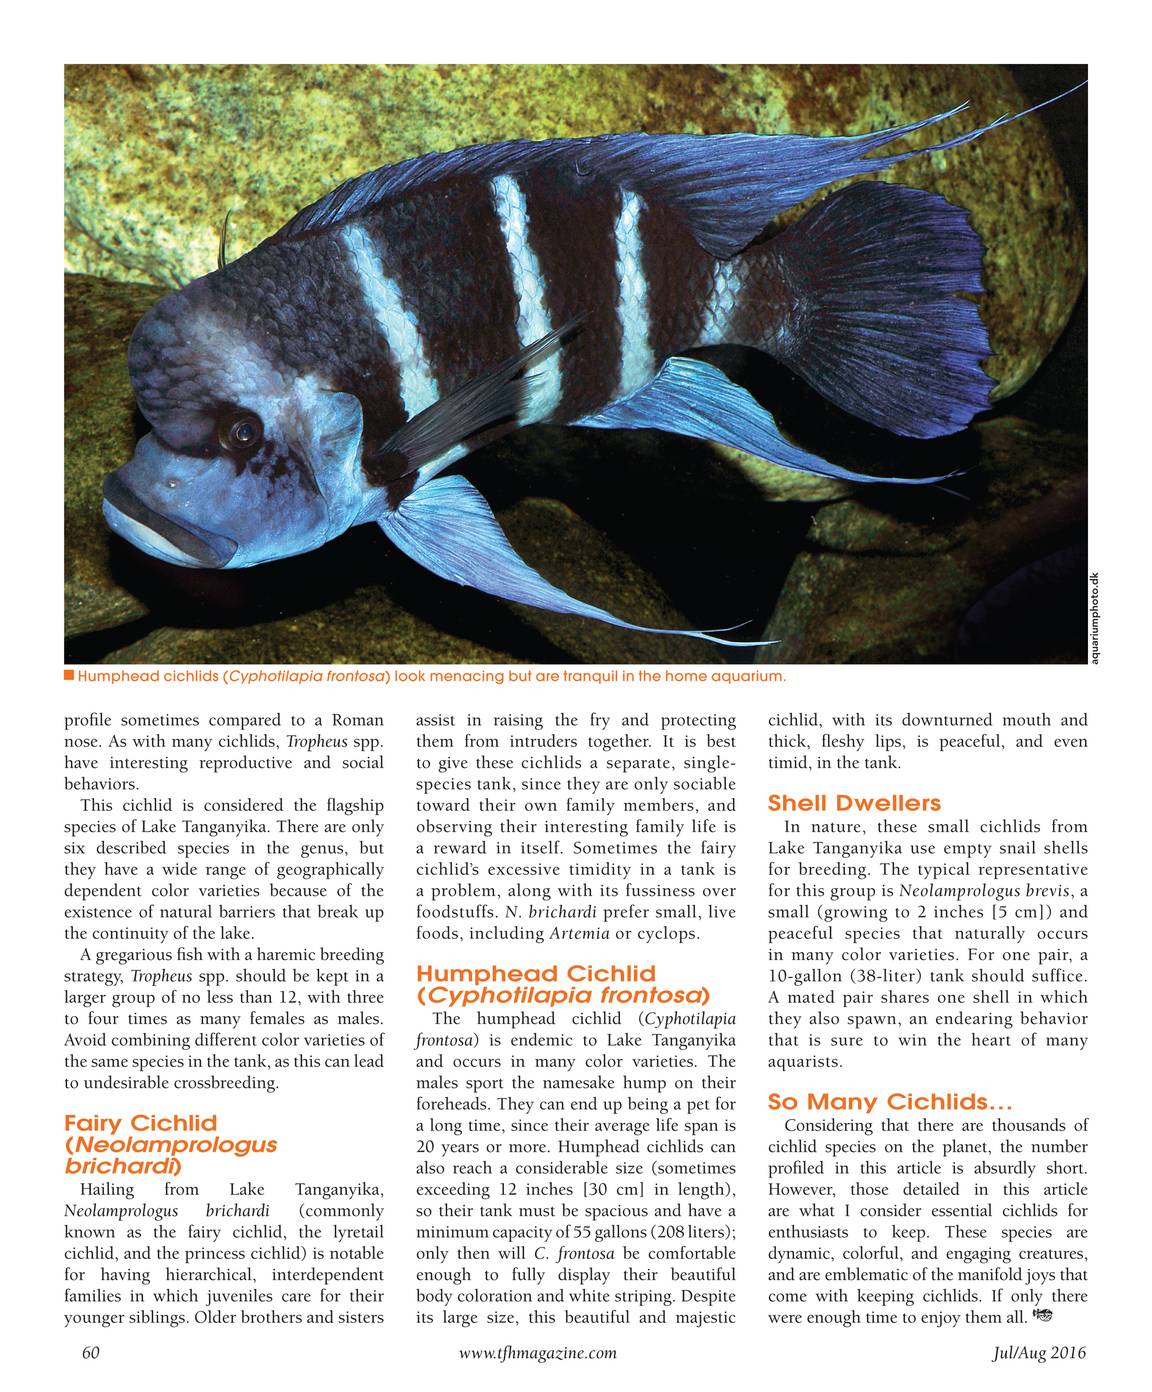 Tropical Fish Hobbyist - Jul/Aug 2016 - page 59